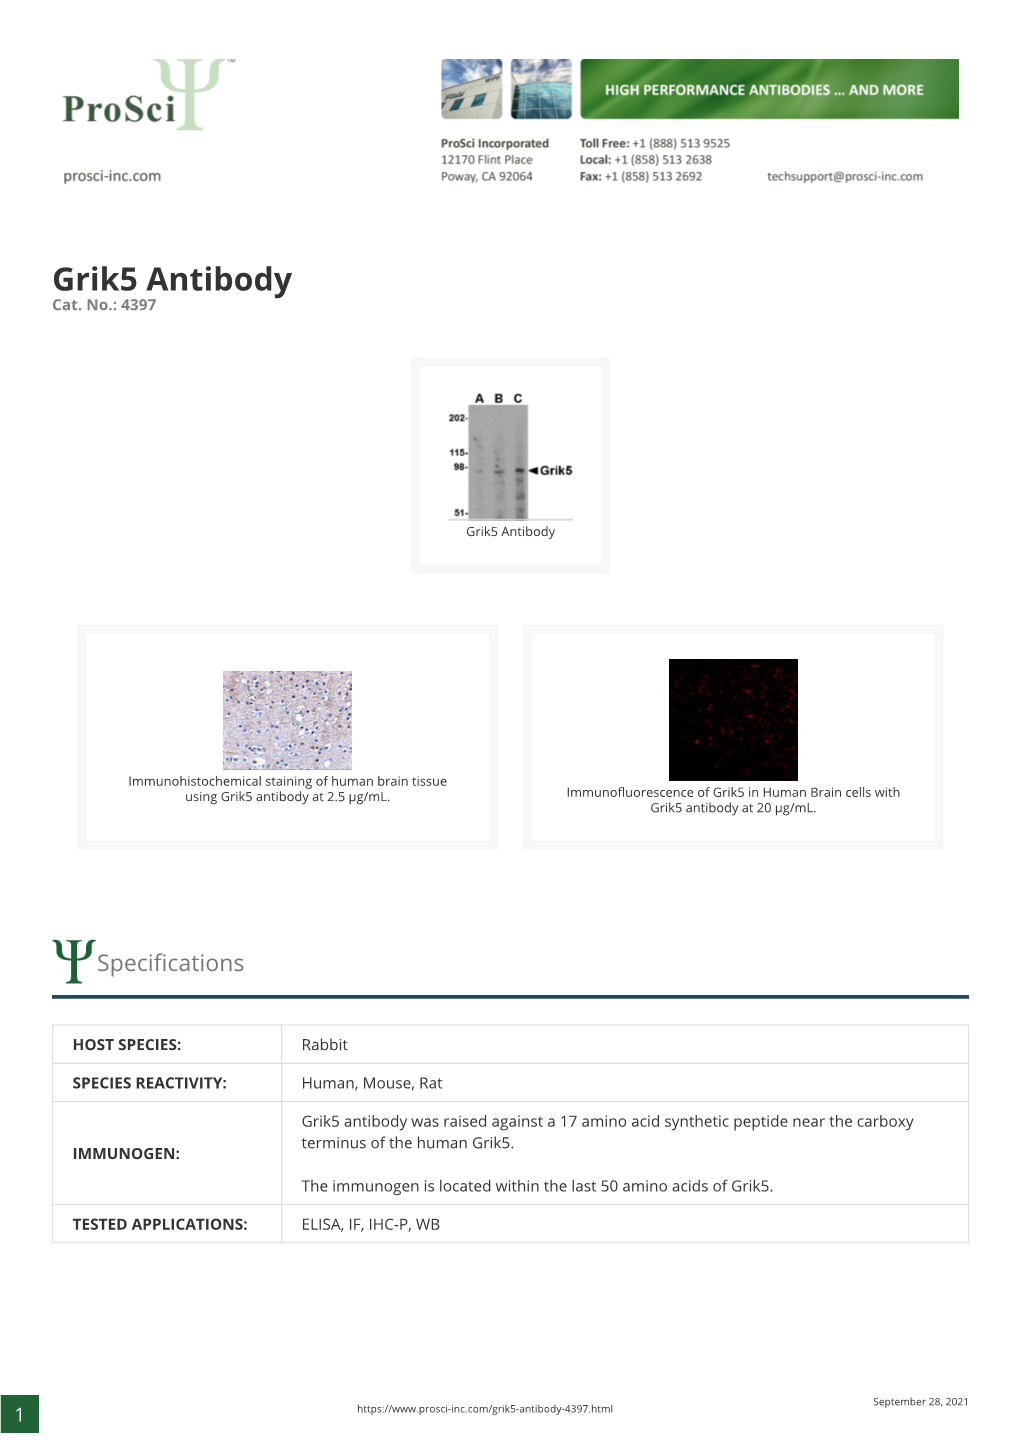 Grik5 Antibody Cat